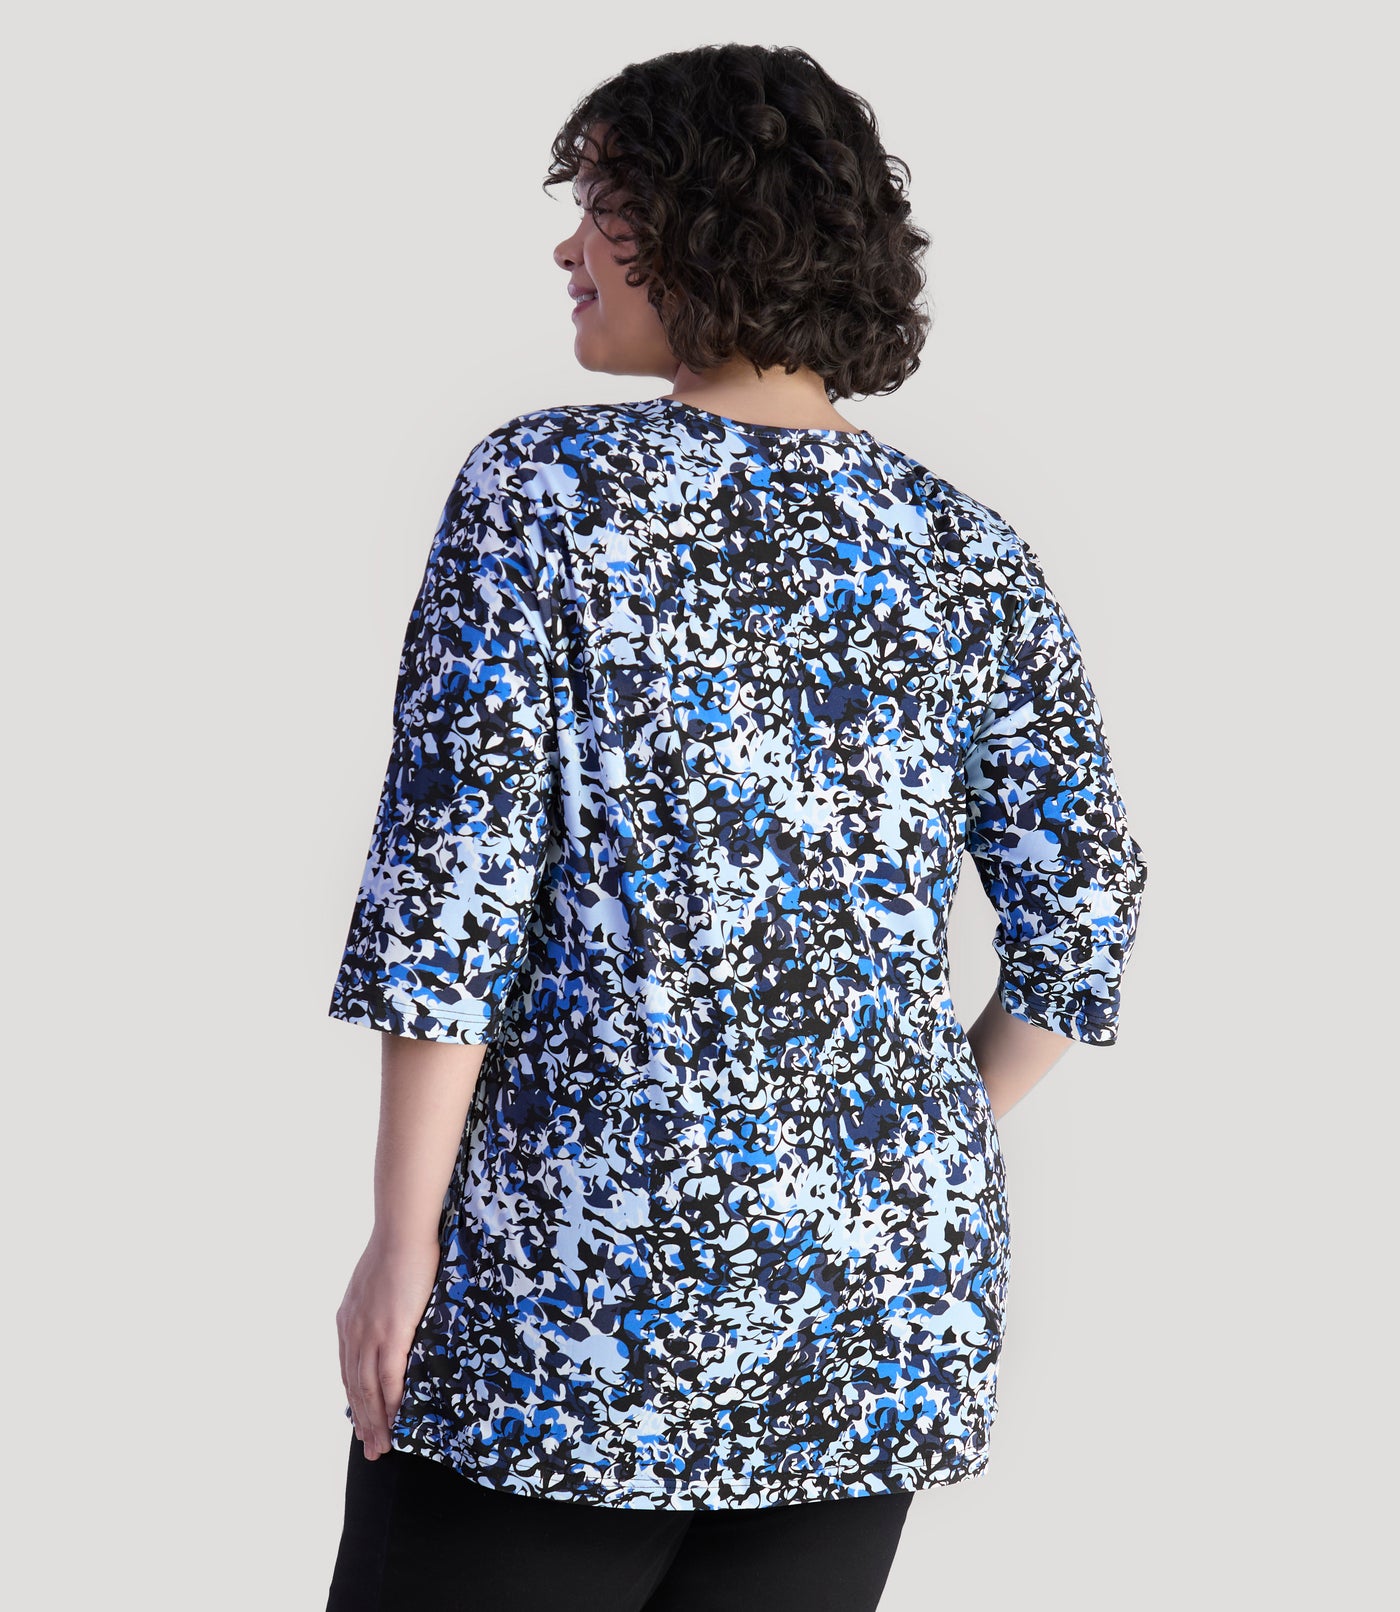 Model, facing back, wearing JunoActive's Junonia Lifestyle Printed three quarter sleeve pocketed top in color blue melange print.